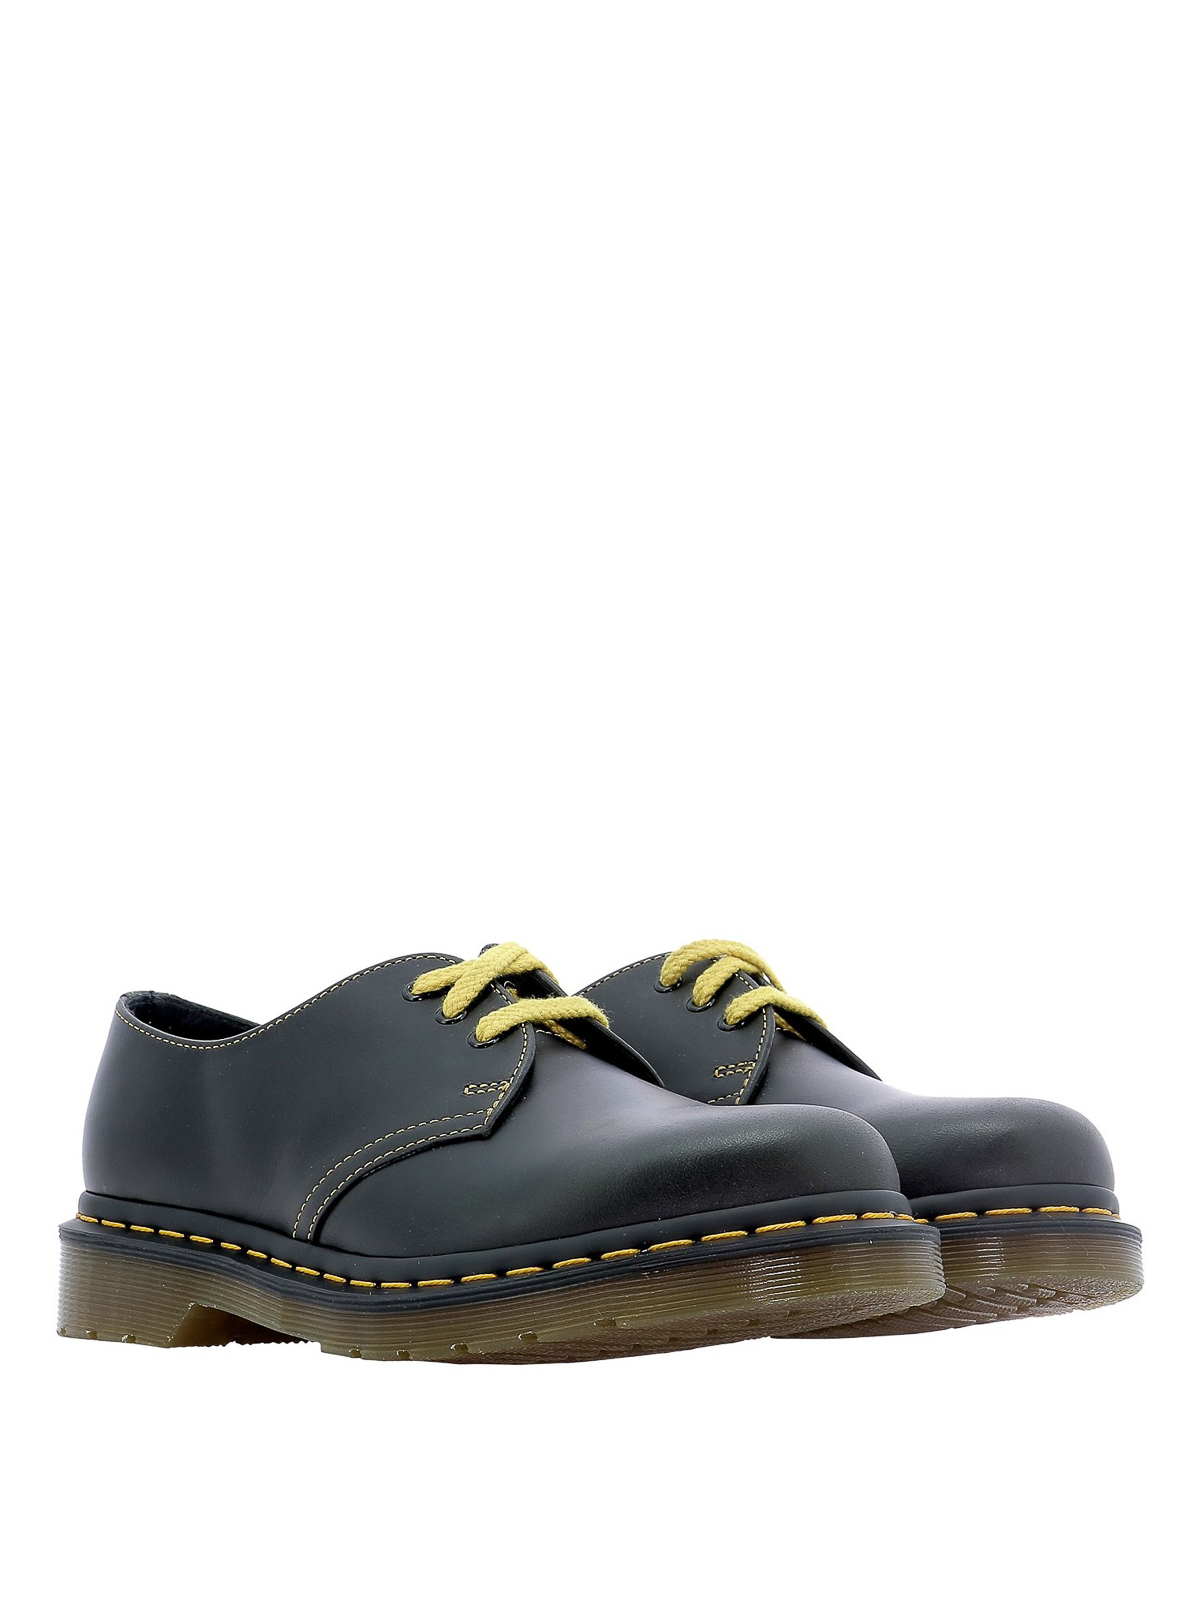 rango Fuente mecánico Zapatos con cordones Dr. Martens - Zapatos Con Cordones - 1461 -  DMS1461DGAT26246021